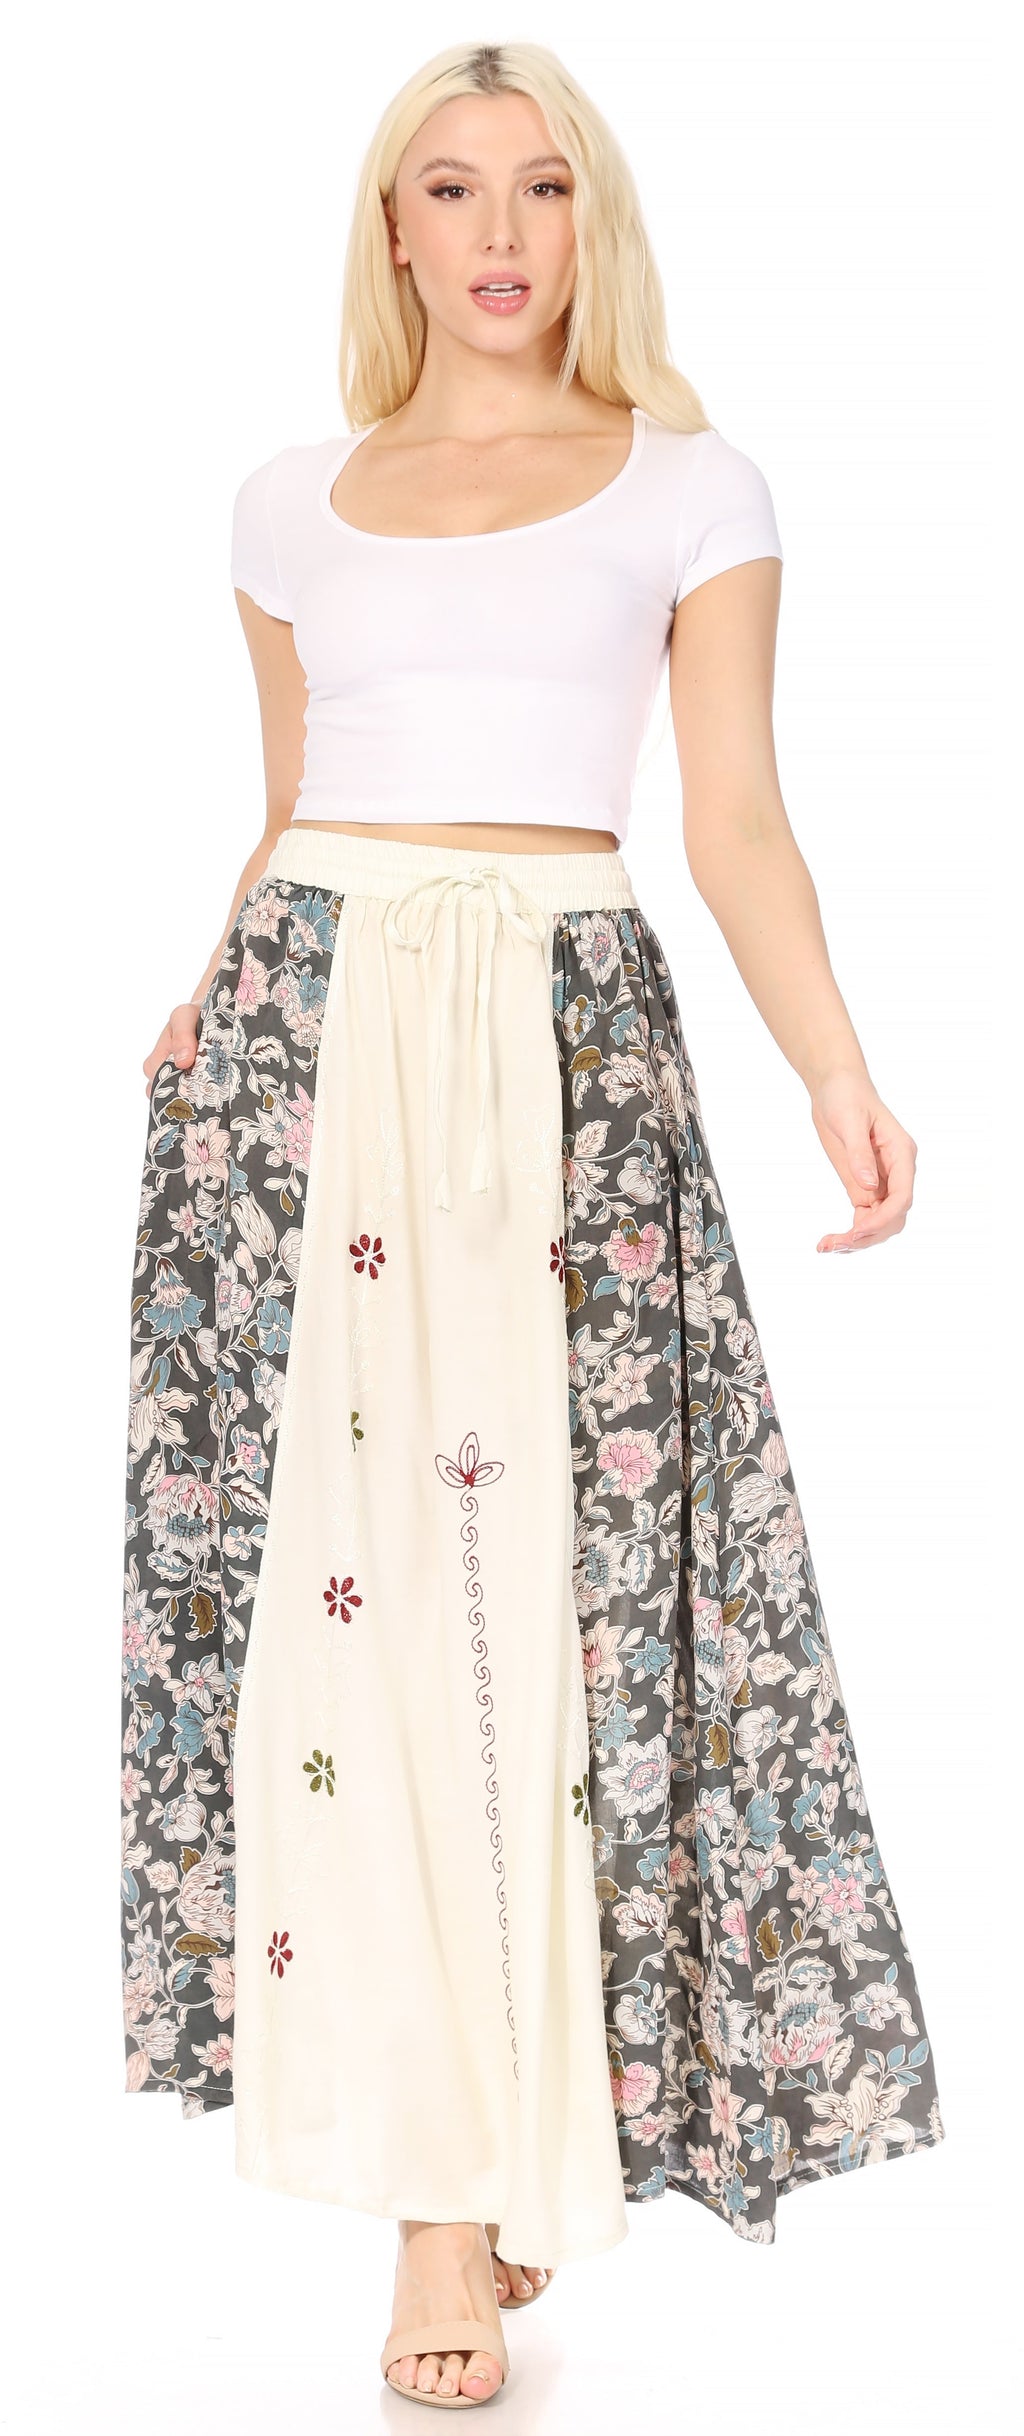 Sakkas Maran Women's Boho Embroidery Skirt with Lace Elastic Waist and